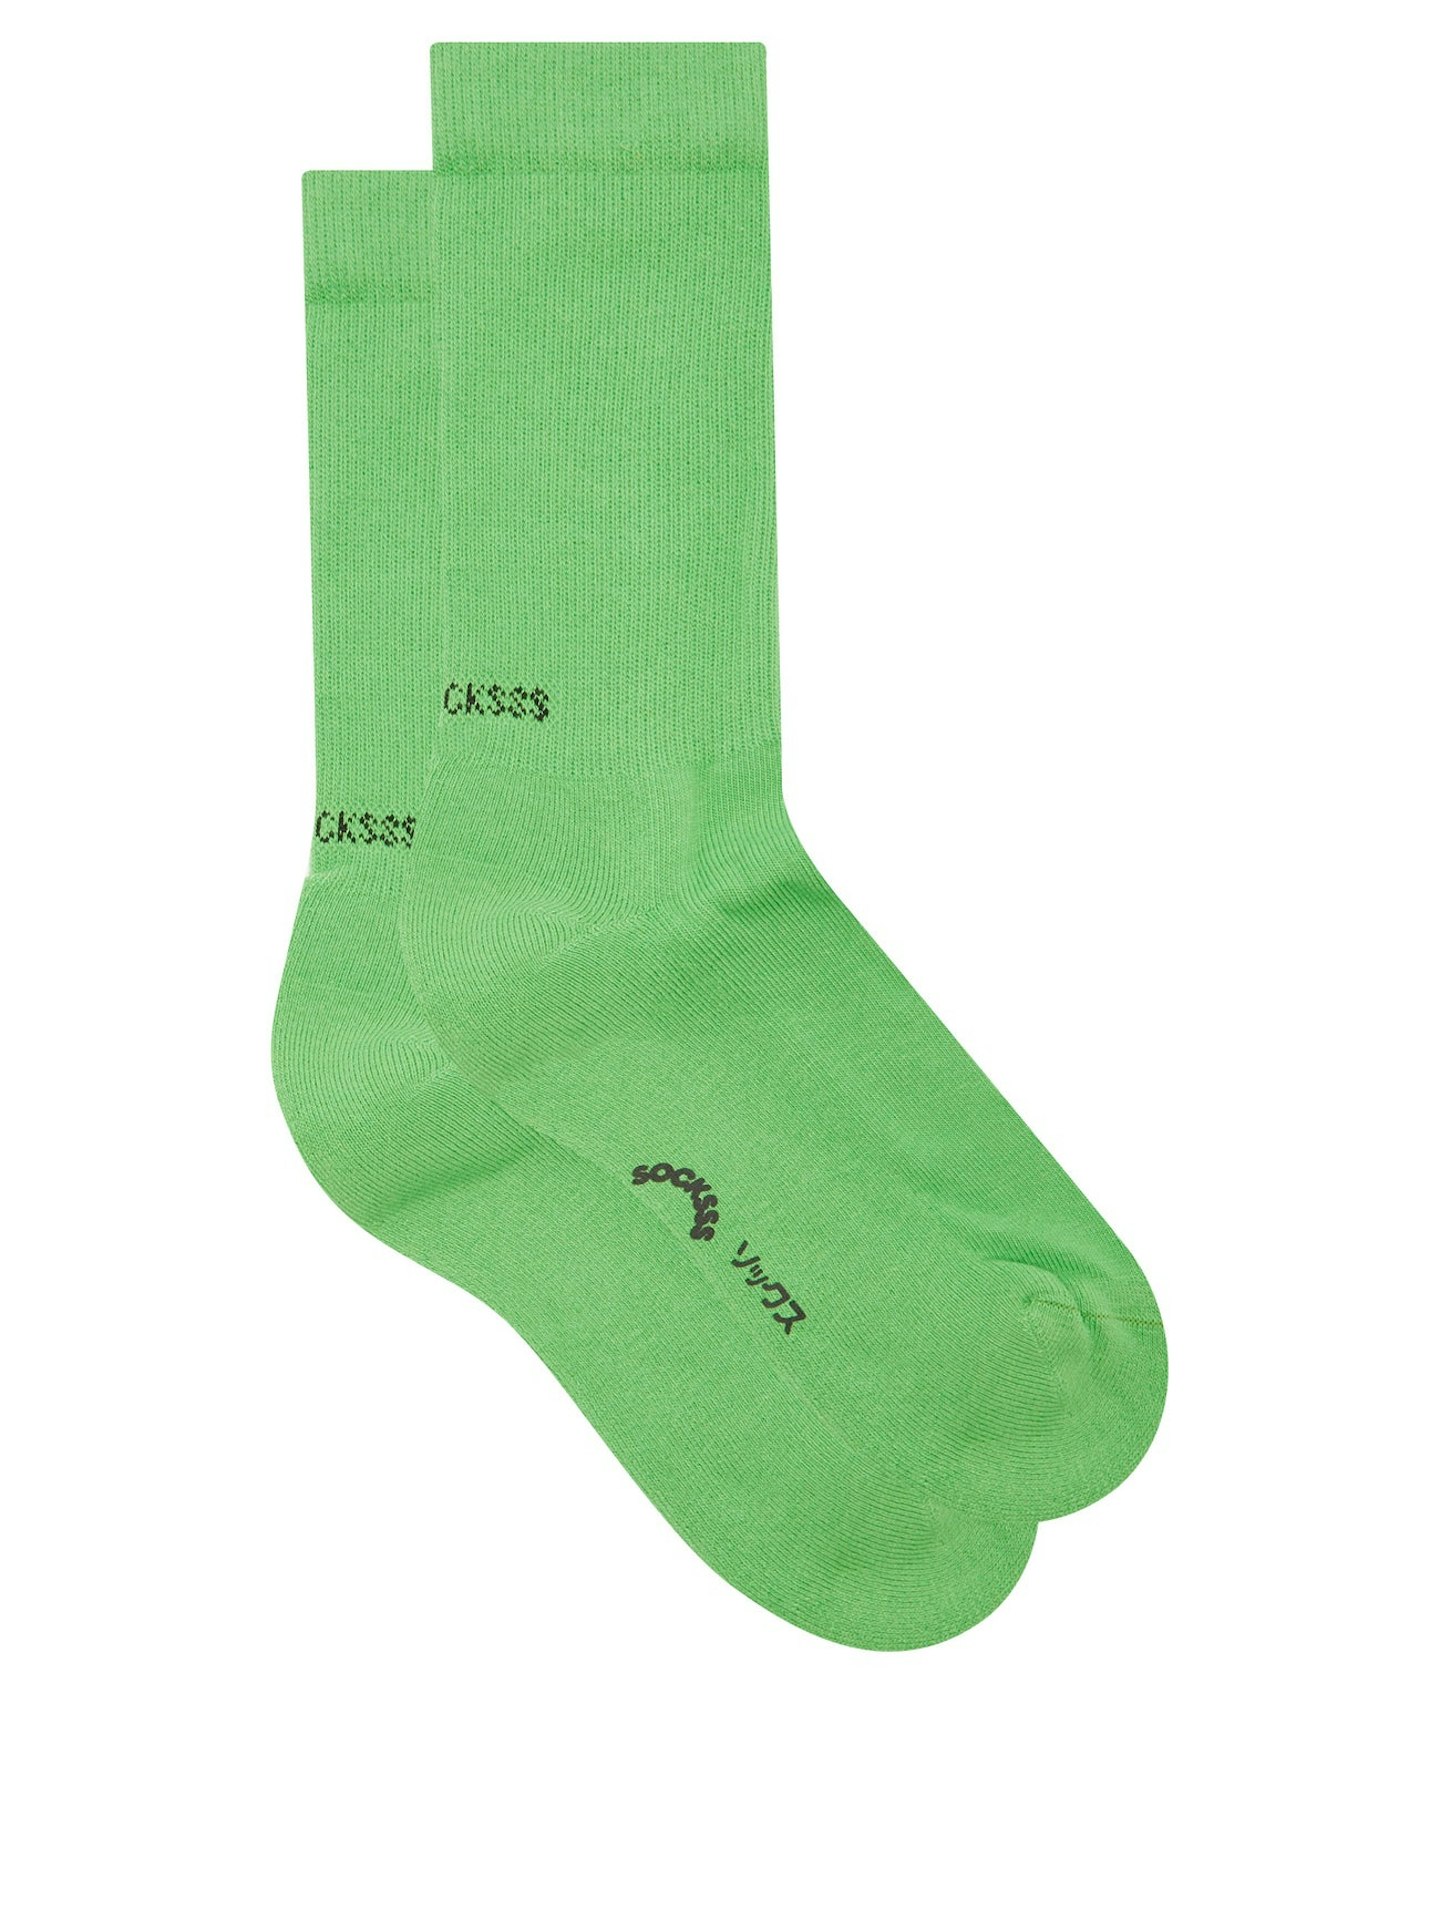 SOCKSSS, Tennis Organic Cotton Blend Socks